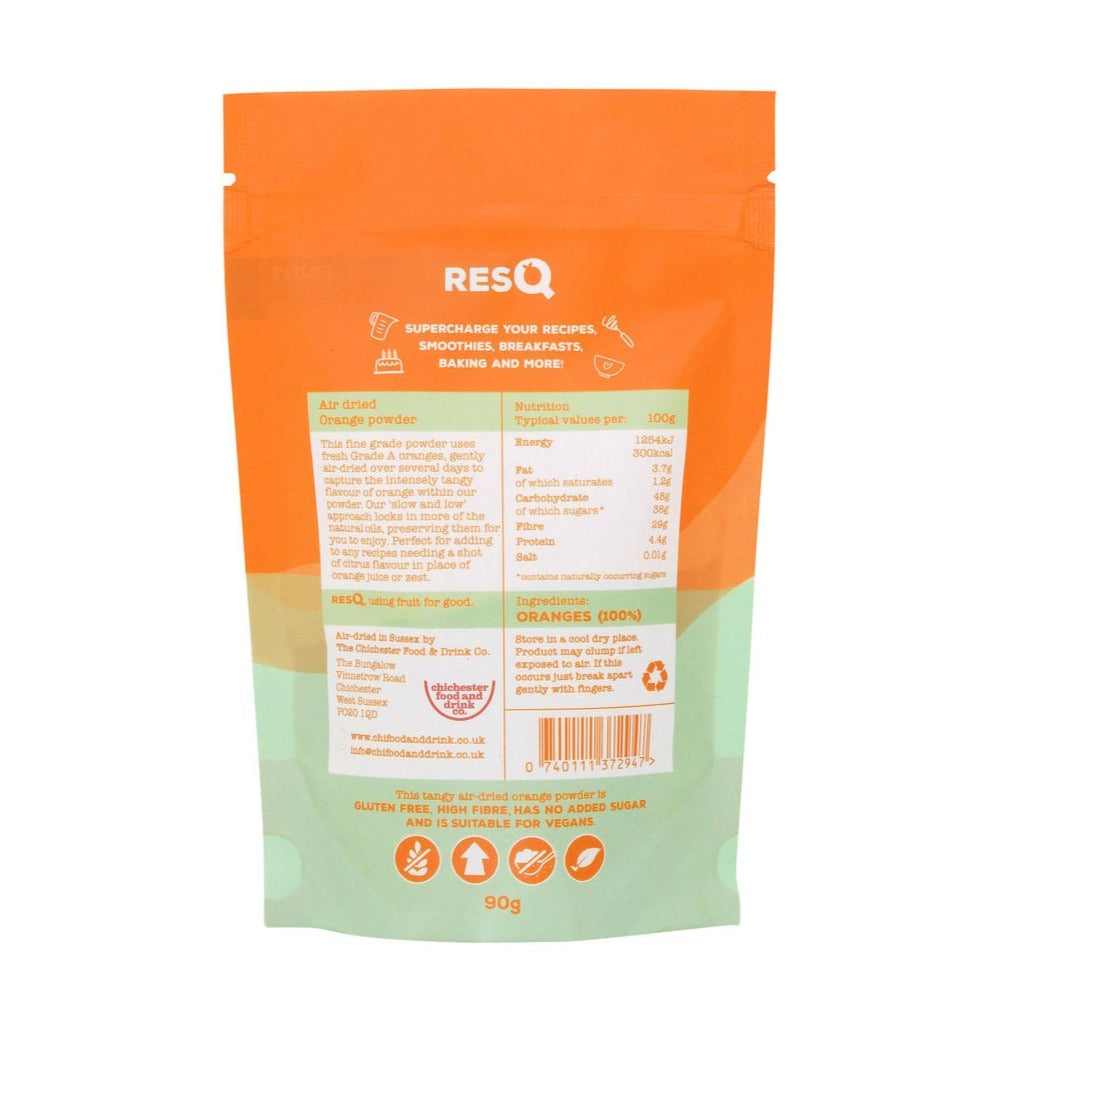 RESQ Orange Powder - 100% Air-Dried Oranges 90g